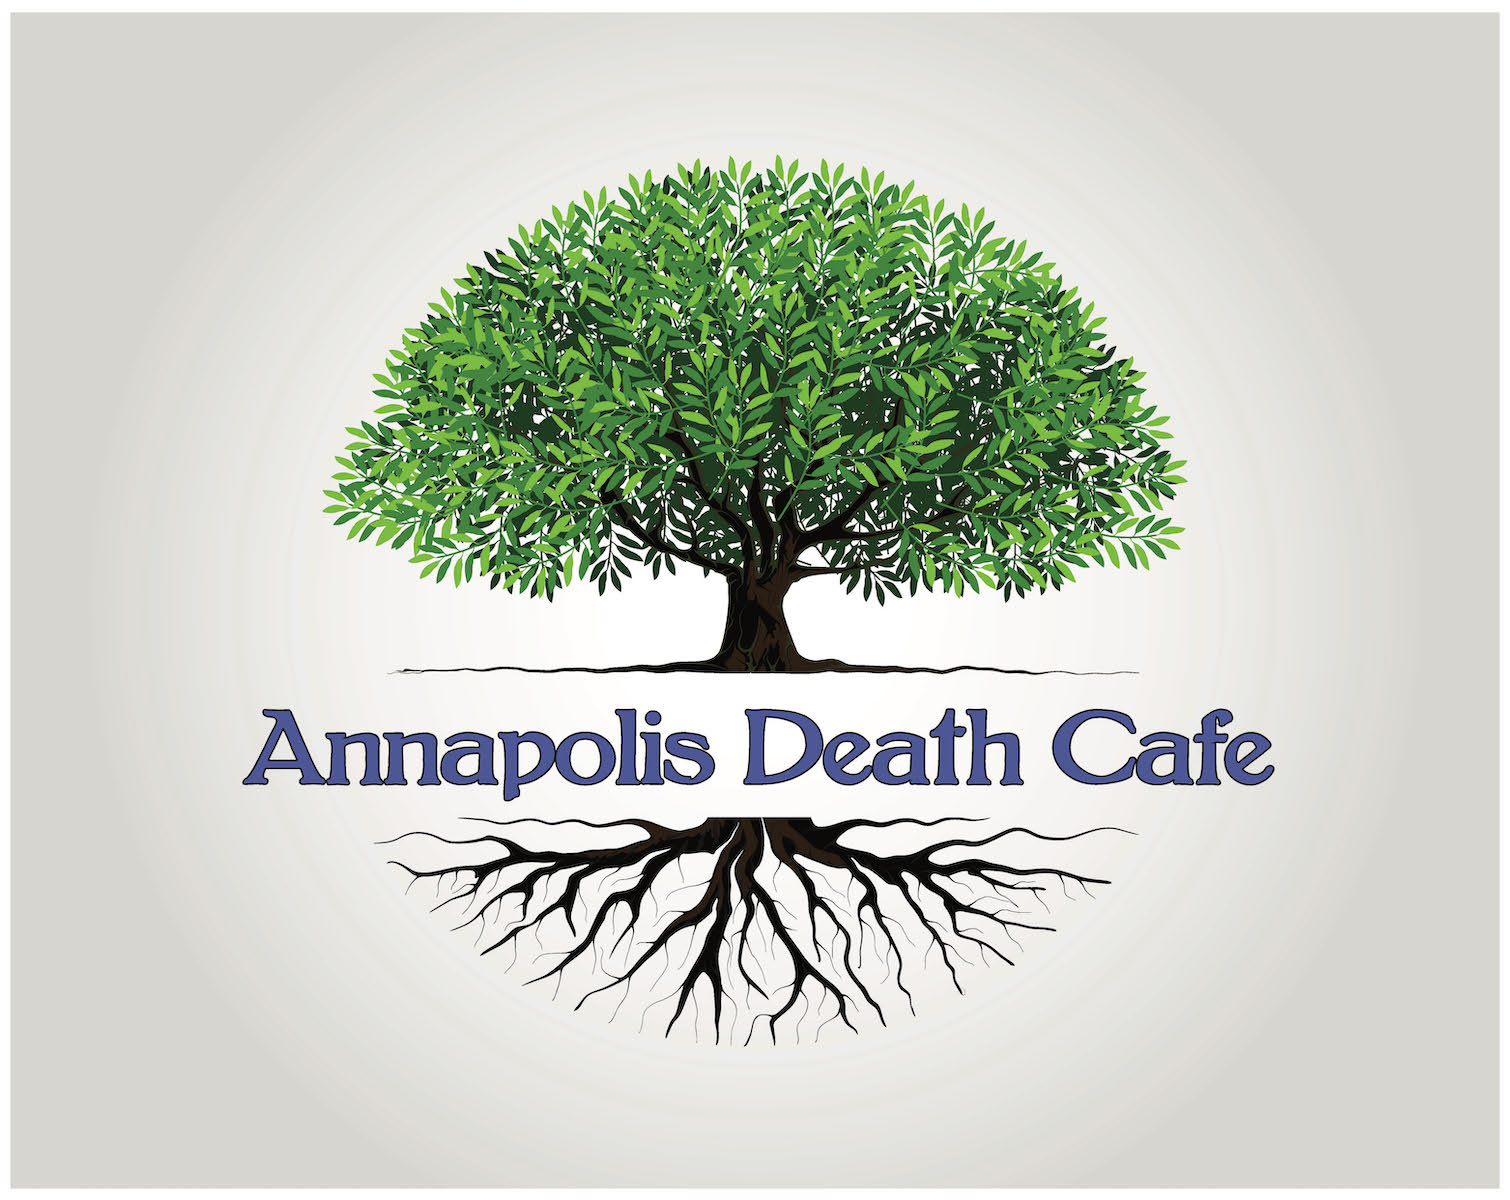 Annapolis Death Cafe